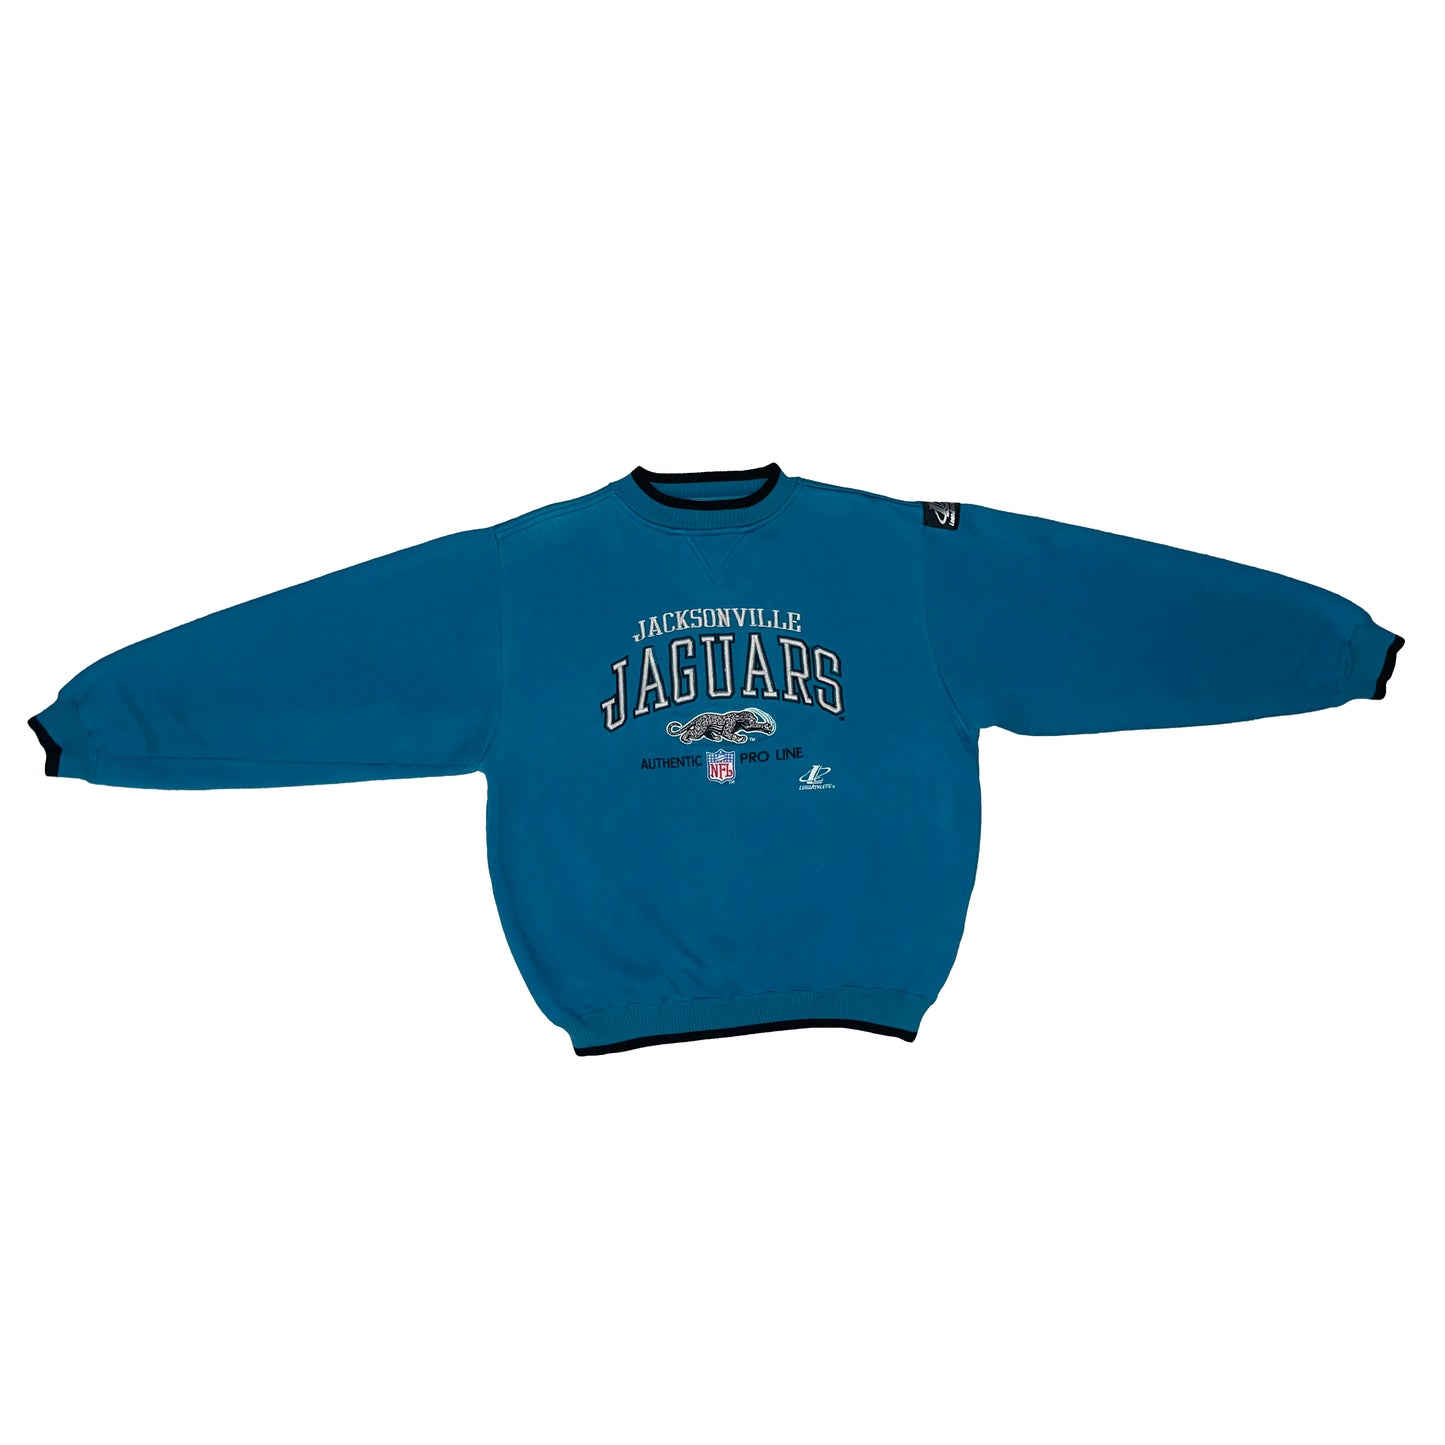 Vintage Jacksonville Jaguars Embroidered LOGO ATHLETIC sweatshirt size XL